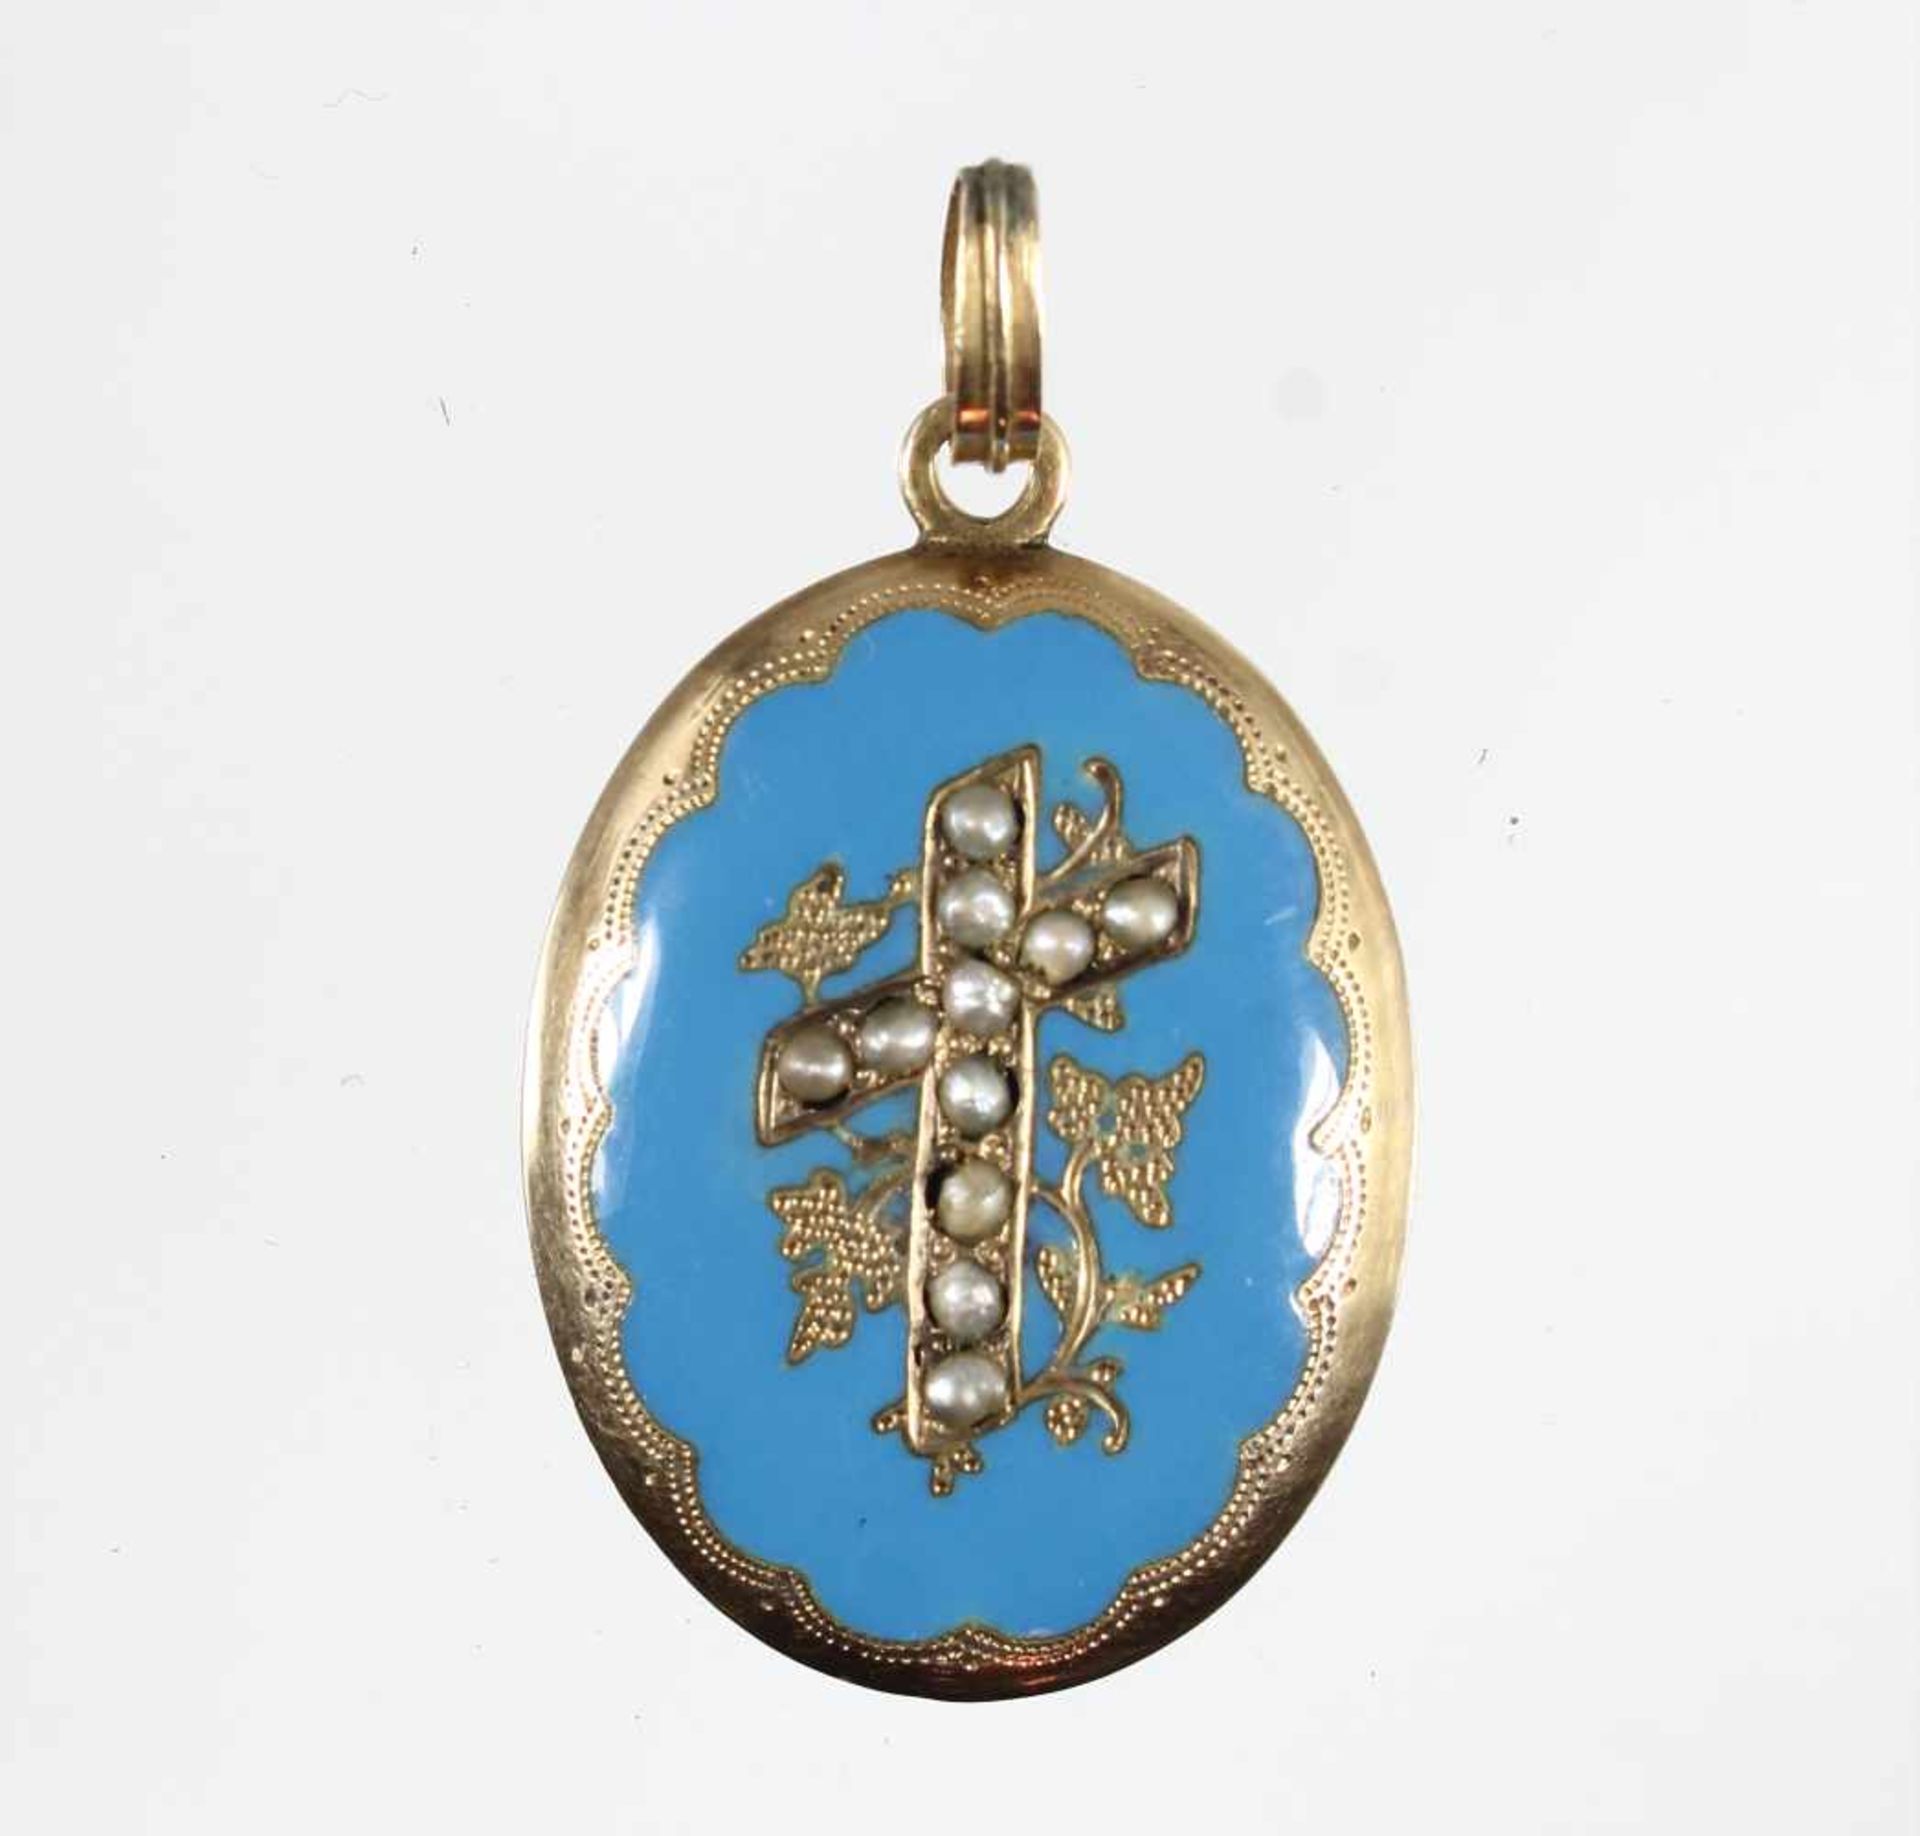 Medaillon um 1870/80, Gold 585/000 (Säure geprüft), blaues opakes Emaille, im Kreuz 11 St. 1/2